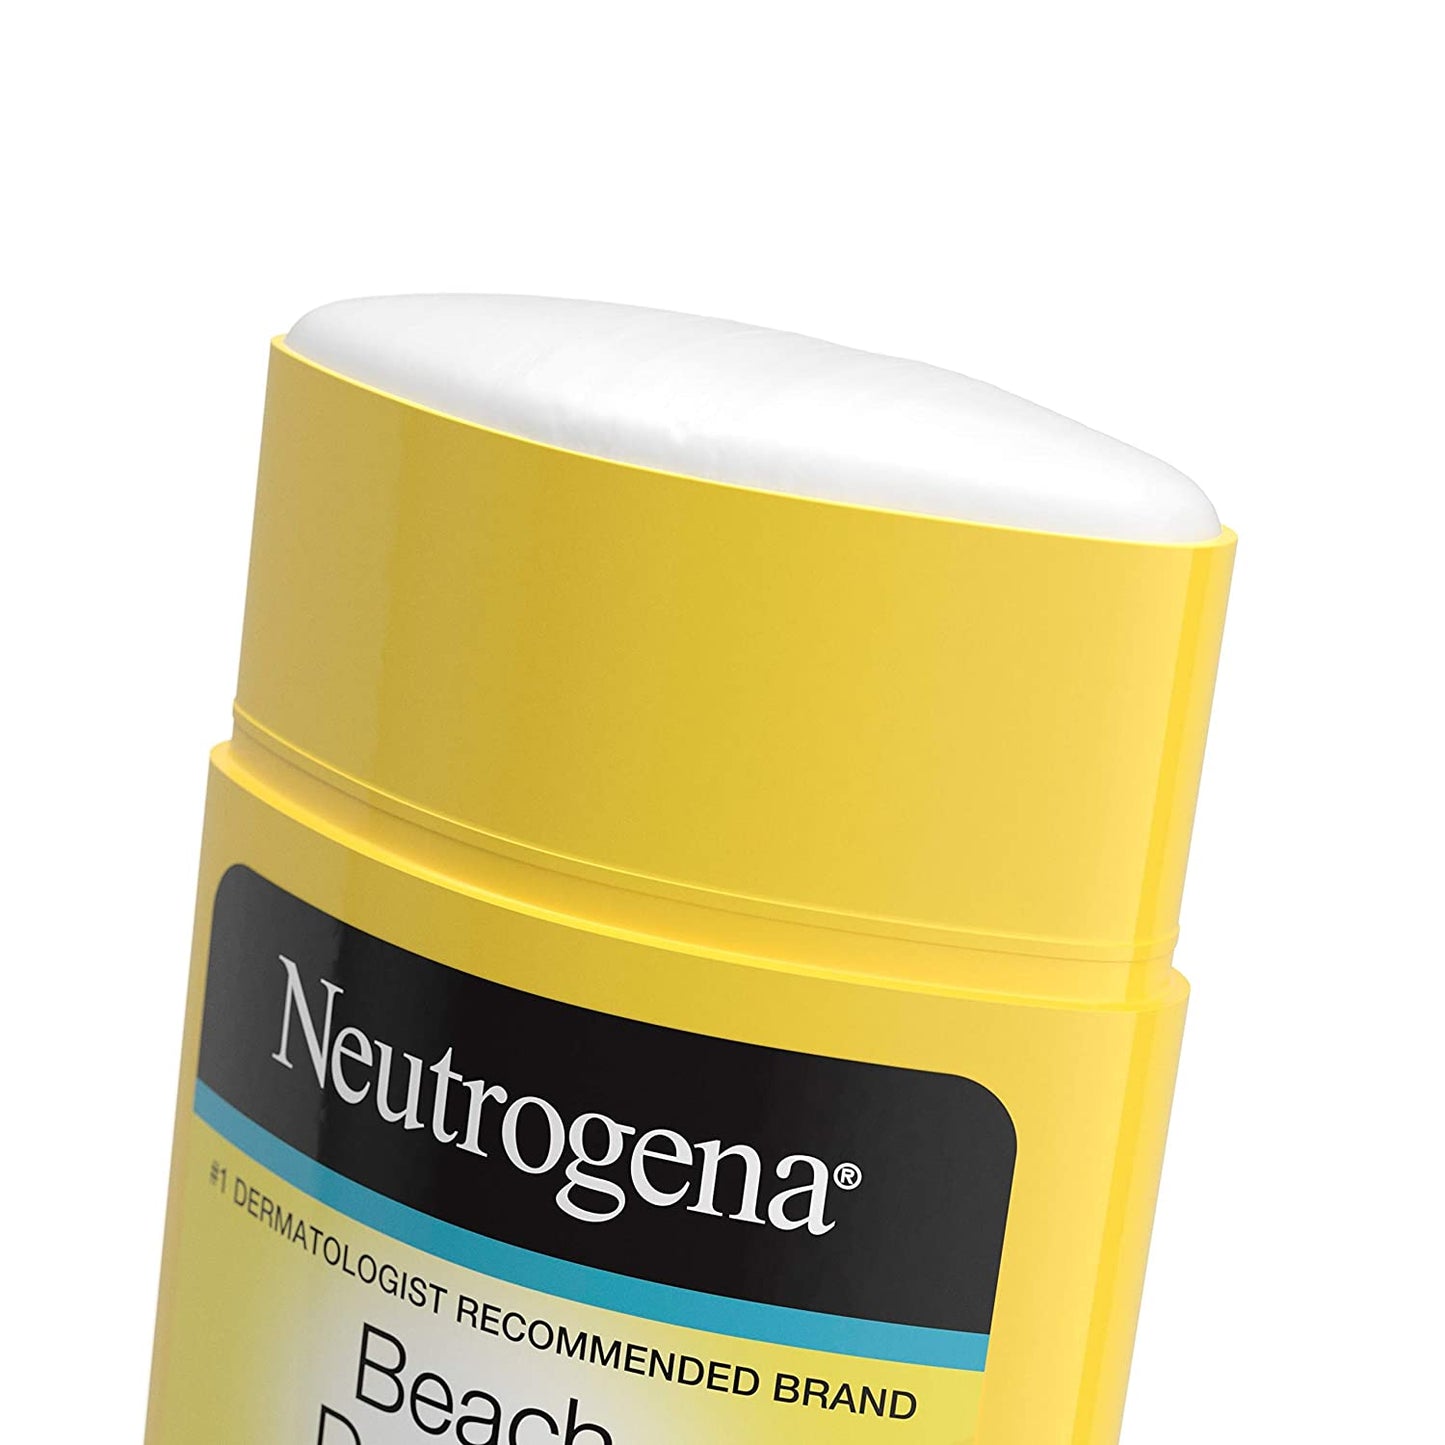 Neutrogena Beach Defense Water + Sun Protection Sunscreen Stick with Broad Spectrum SPF 50+, 1.5 oz. / 42g